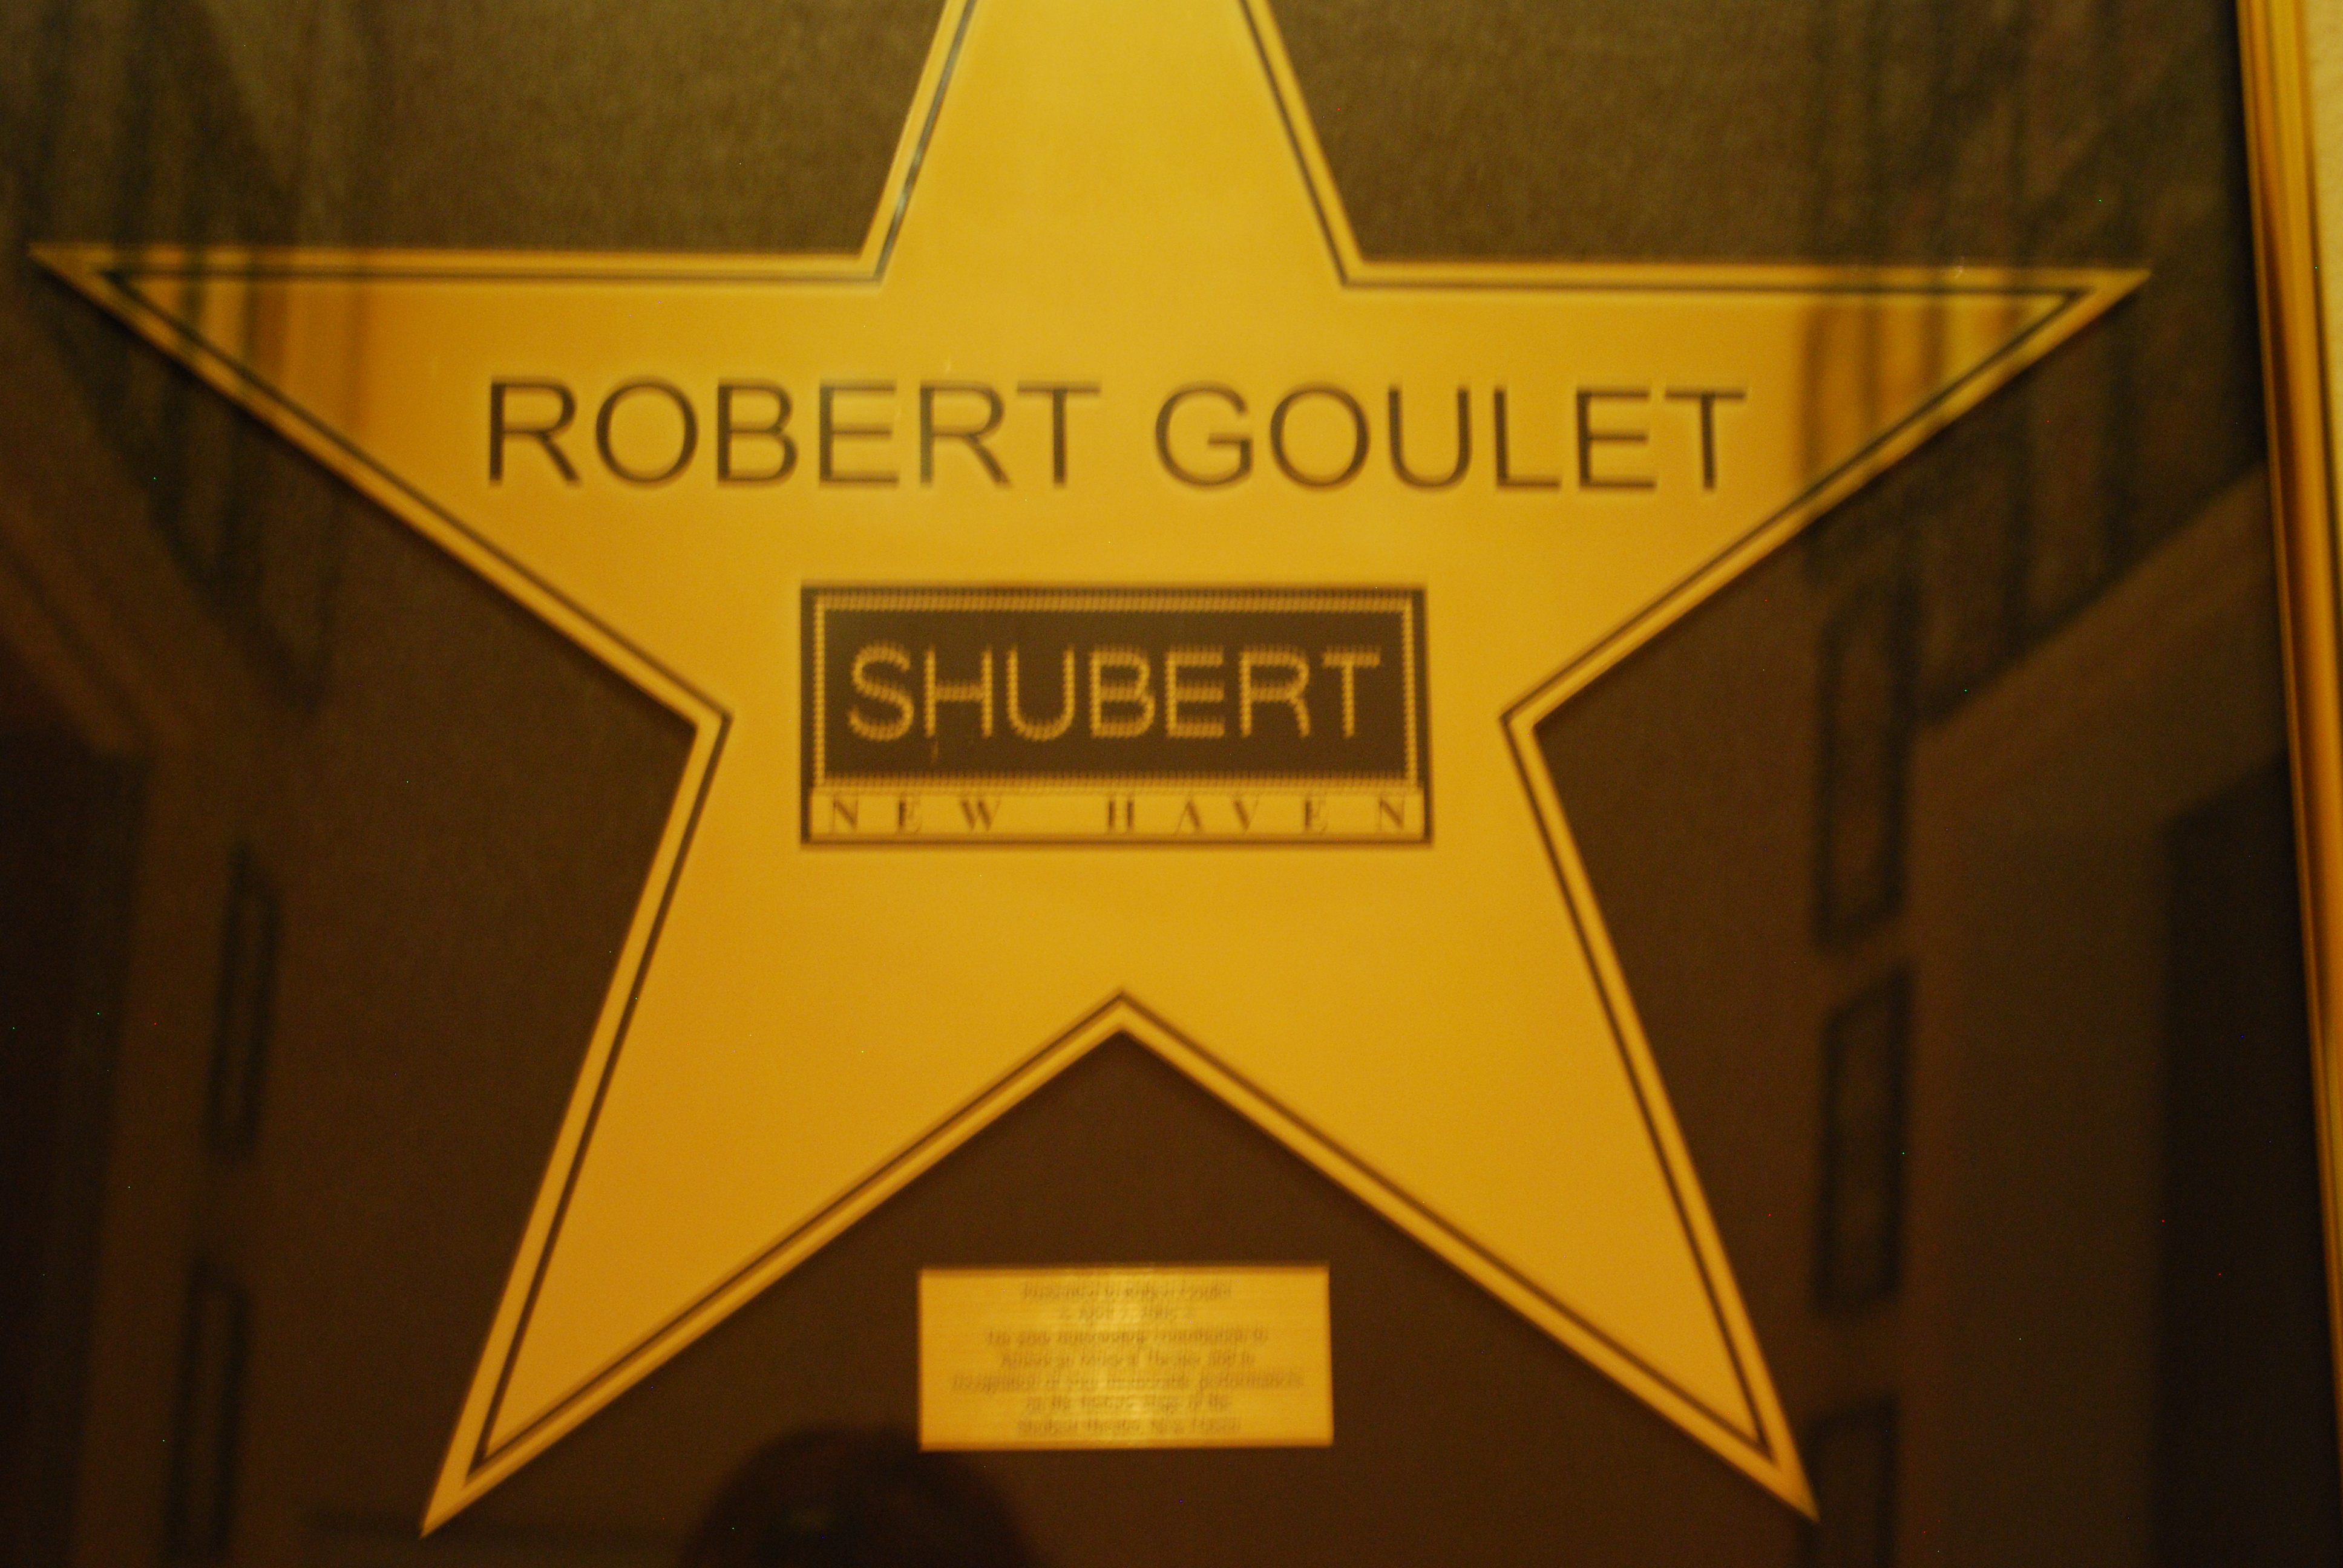 First Star On "Schubert Walk of Fame" (New Haven) (2005)